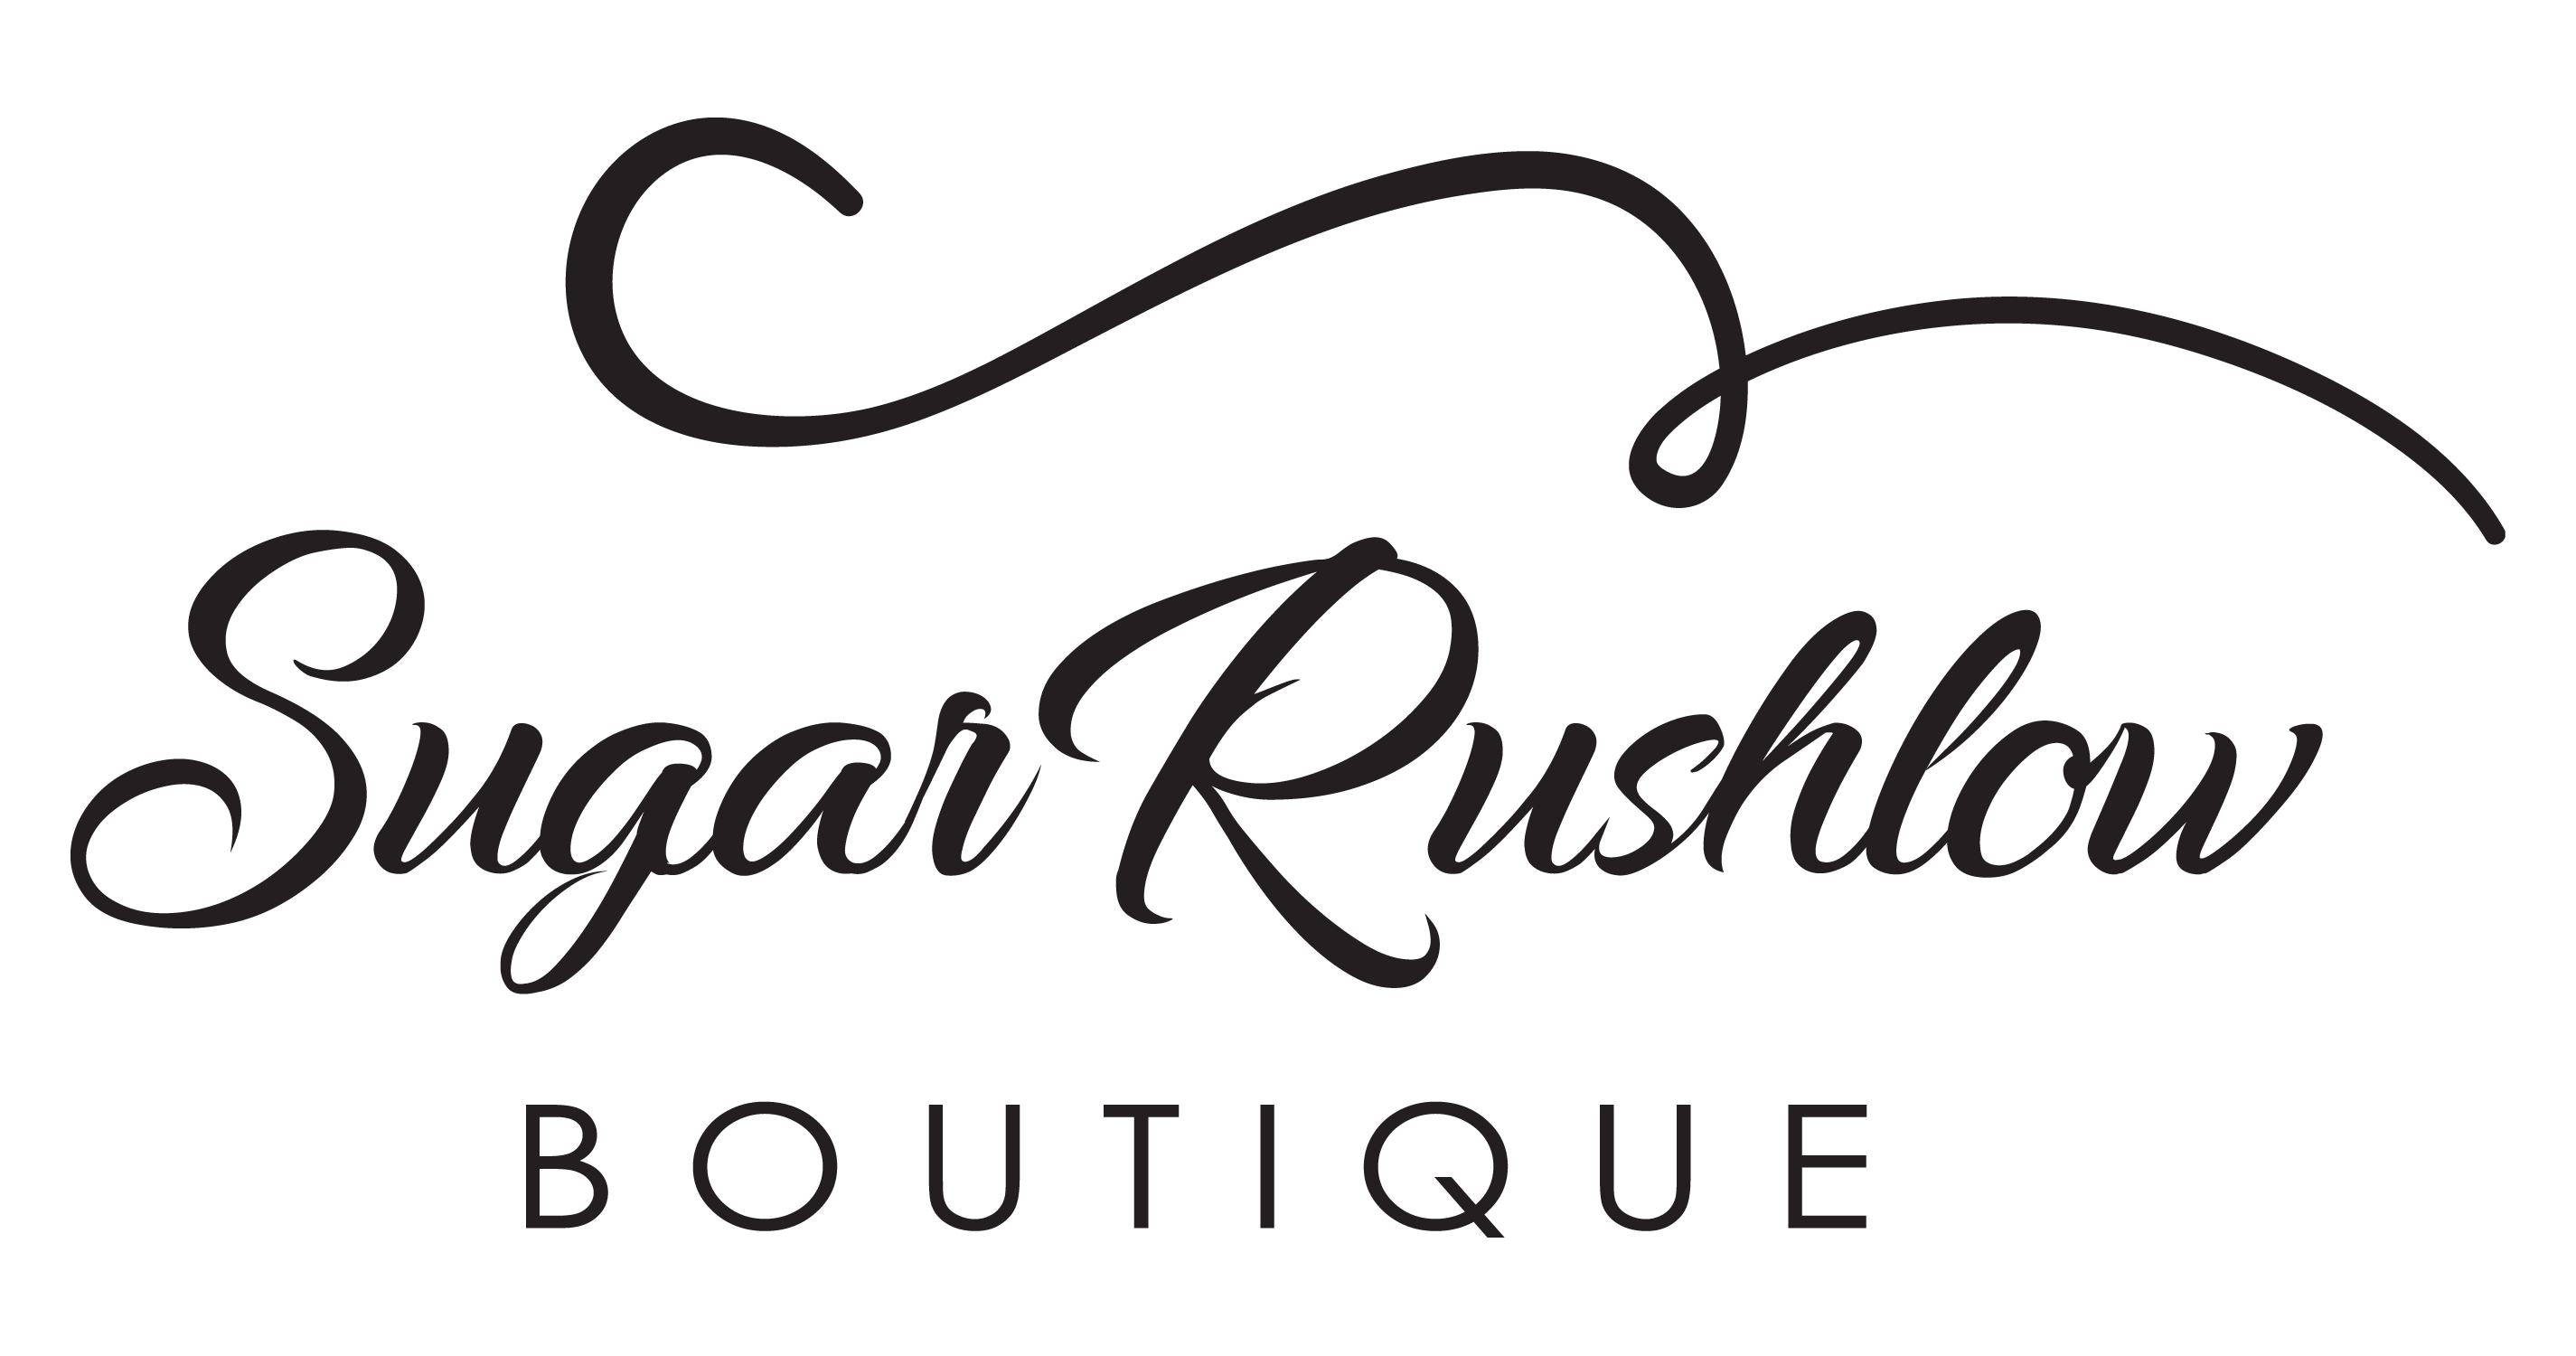 Sugar Rushlow Boutique